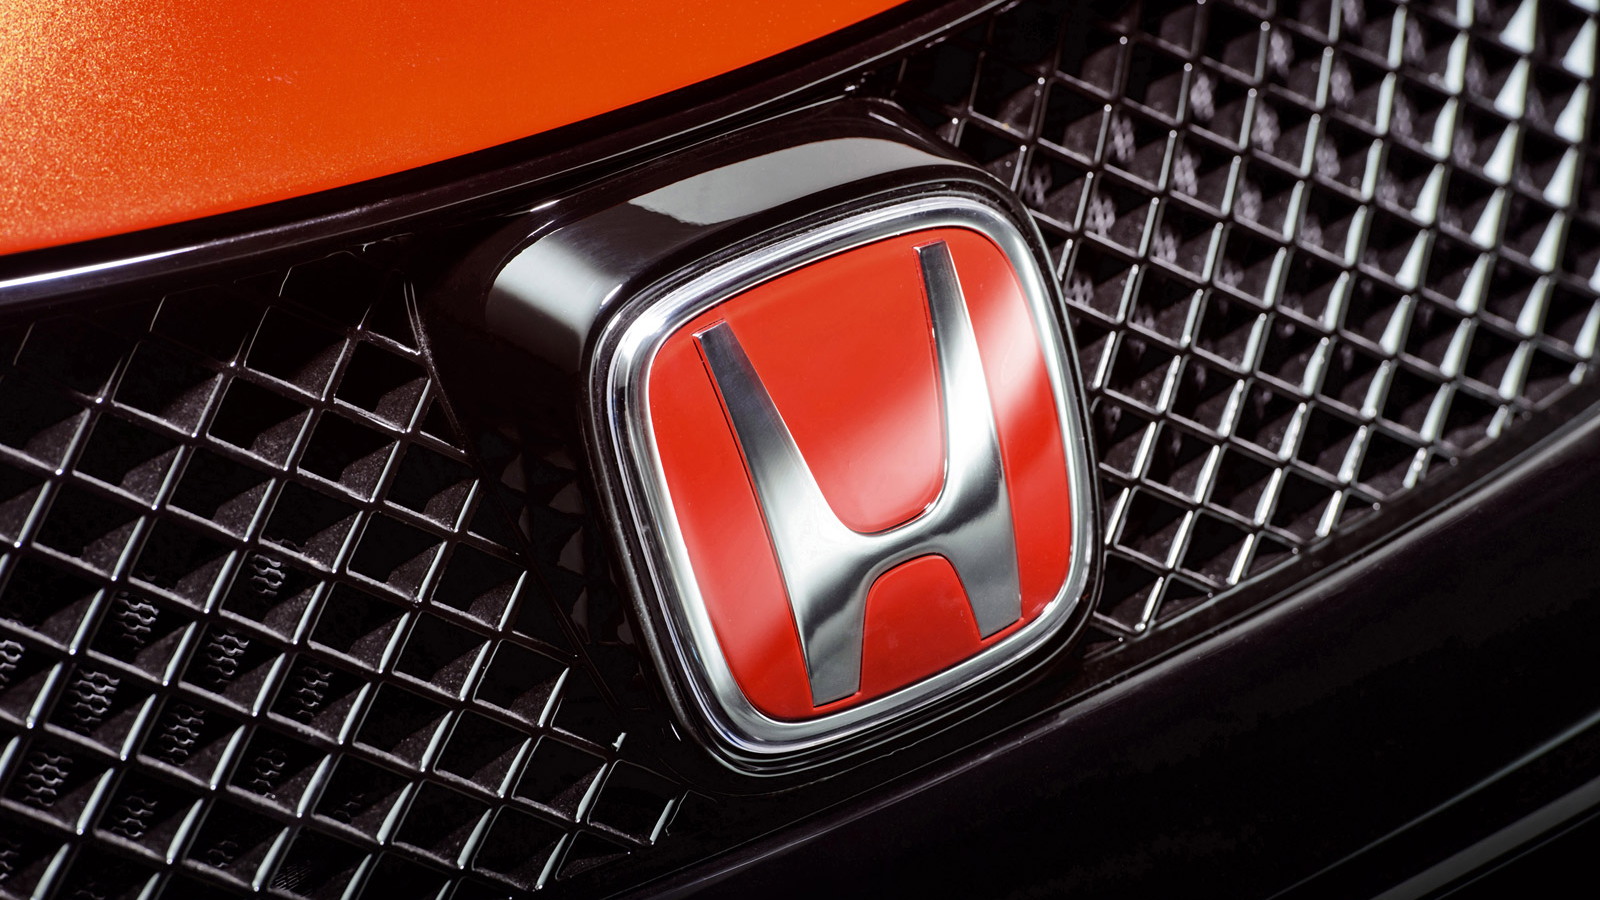 Honda Civic Type R concept, 2014 Geneva Motor Show